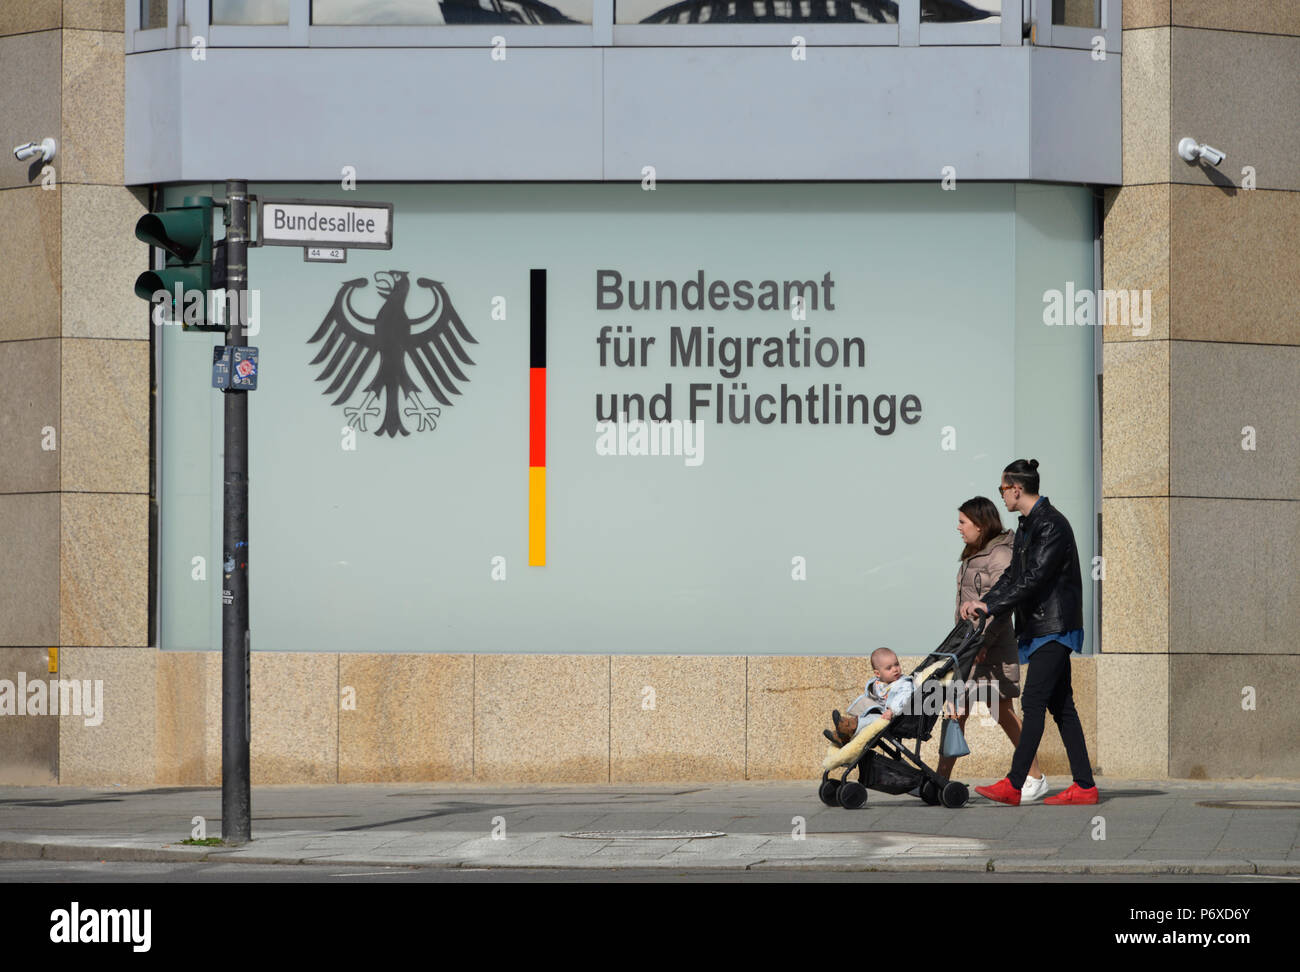 Bundesamt für Migration und Fluechtlinge, Bundesallee, Wilmersdorf Berlin, Deutschland Banque D'Images